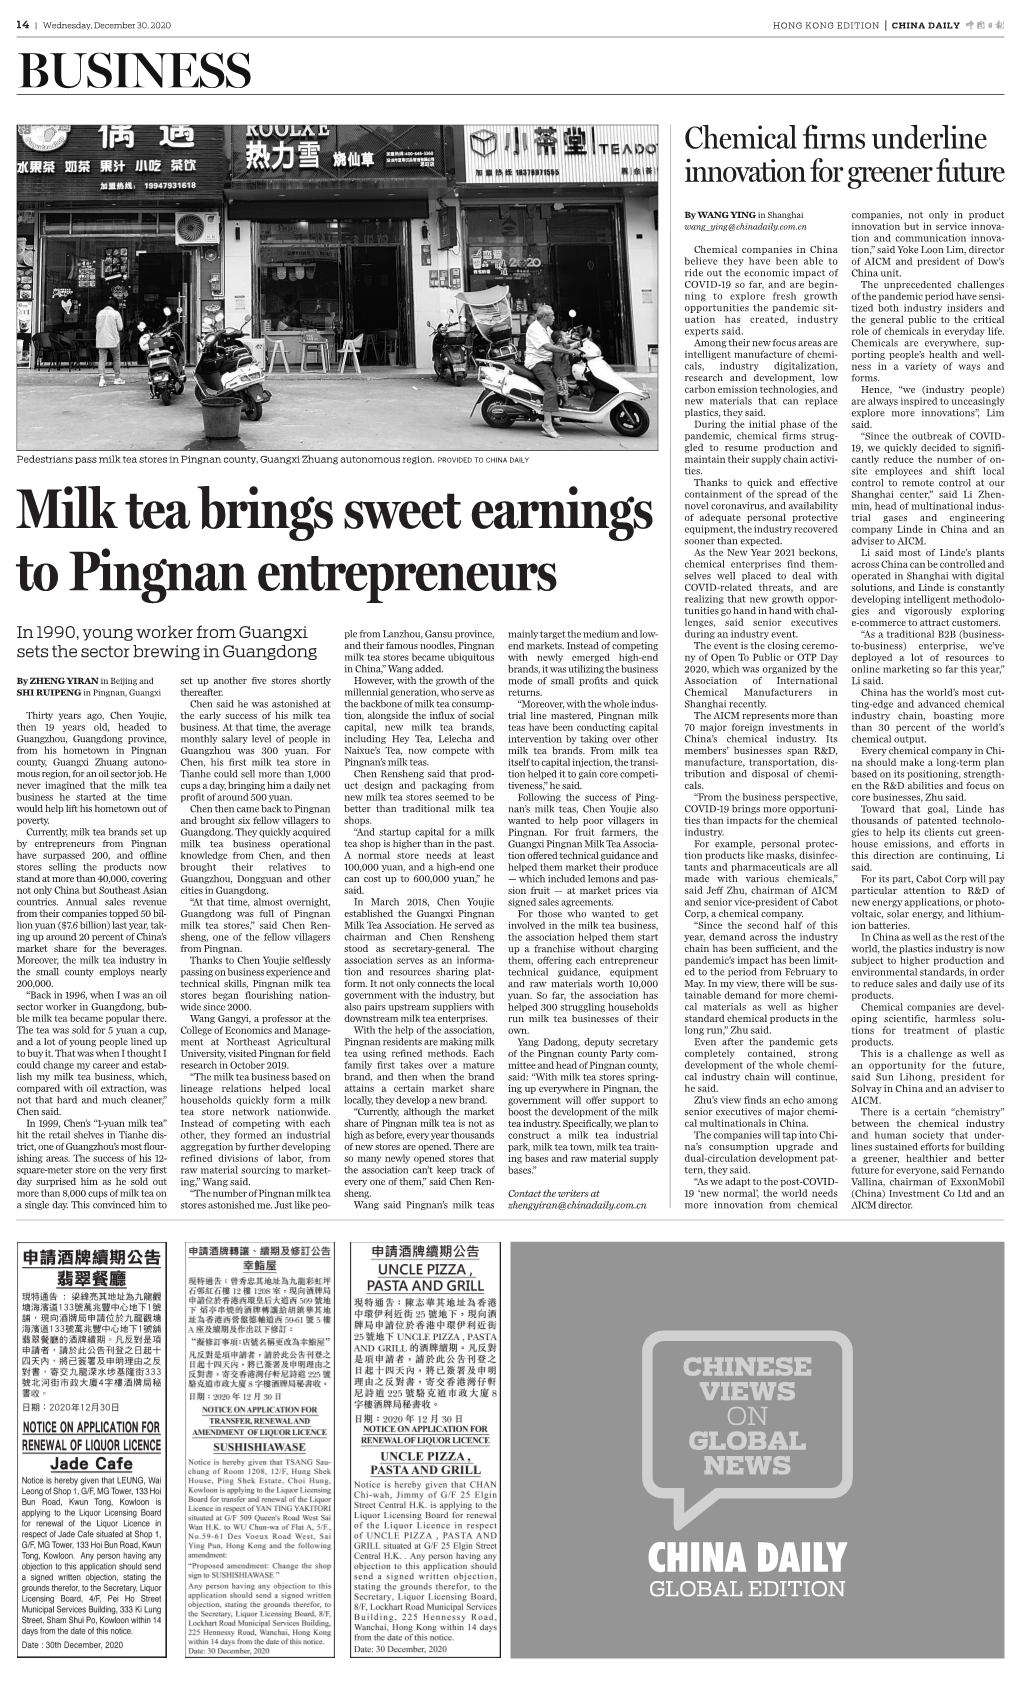 Milk Tea Brings Sweet Earnings to Pingnan Entrepreneurs